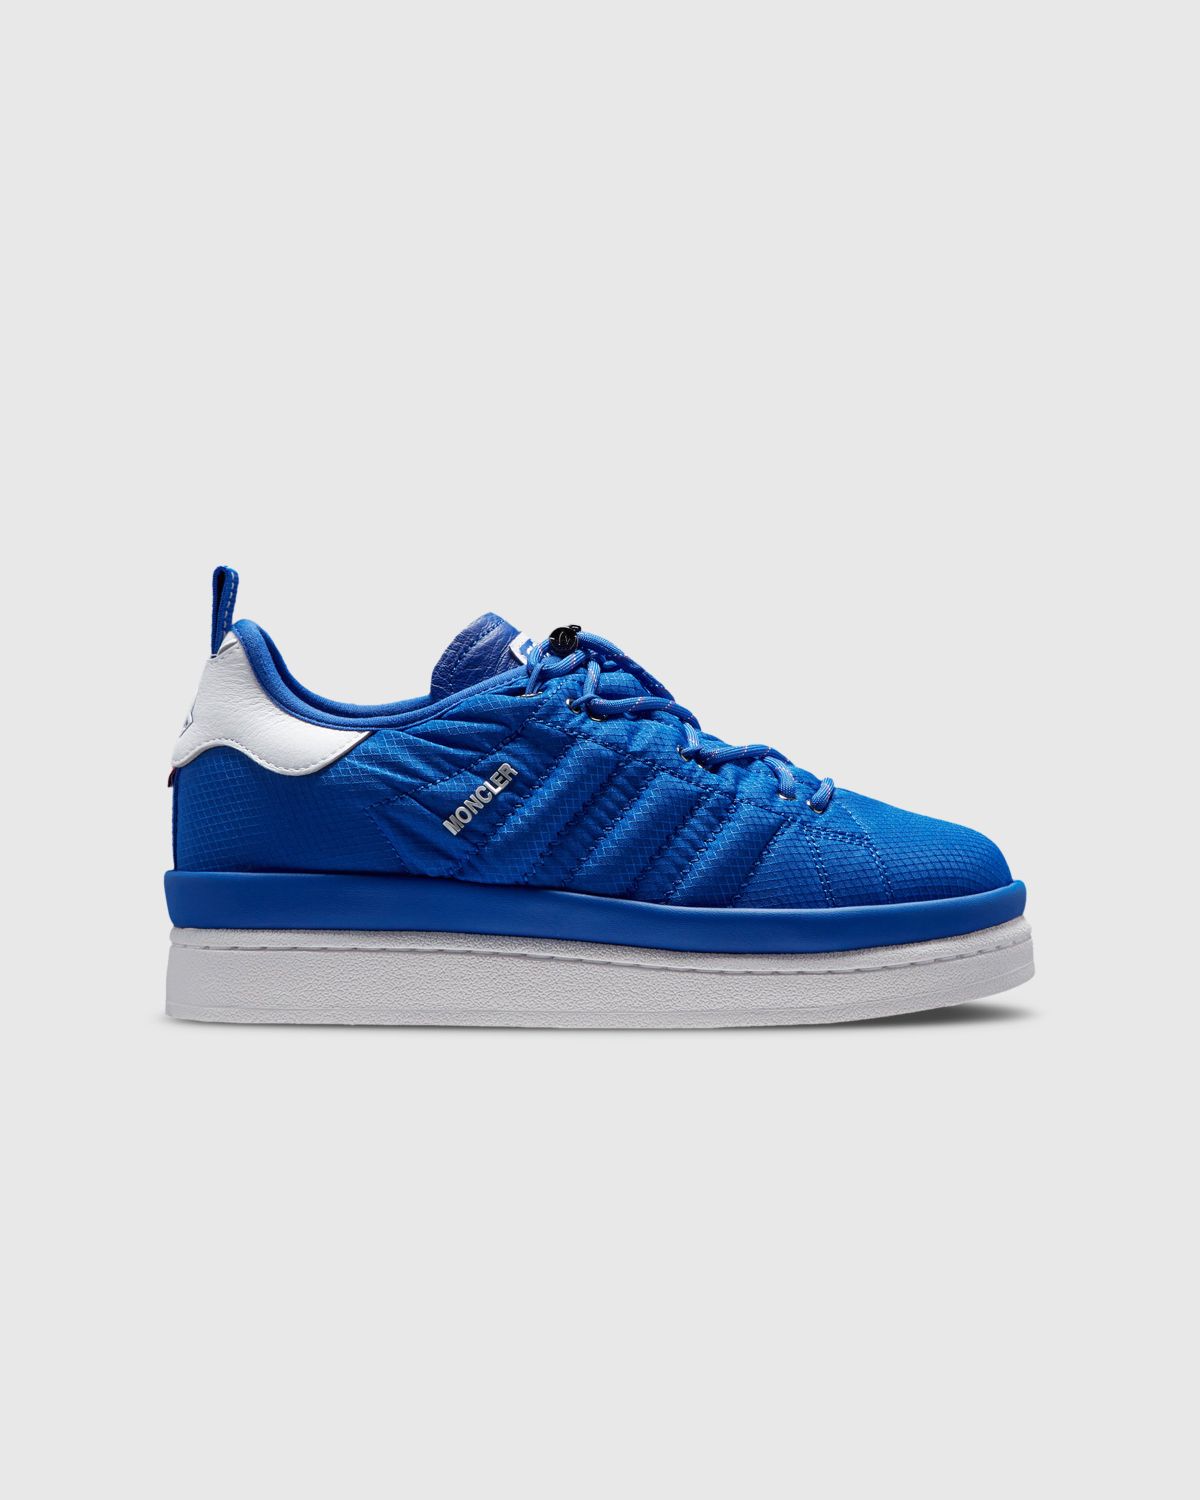 Moncler x adidas Originals – Campus Shoes Royal Blue | Highsnobiety Shop